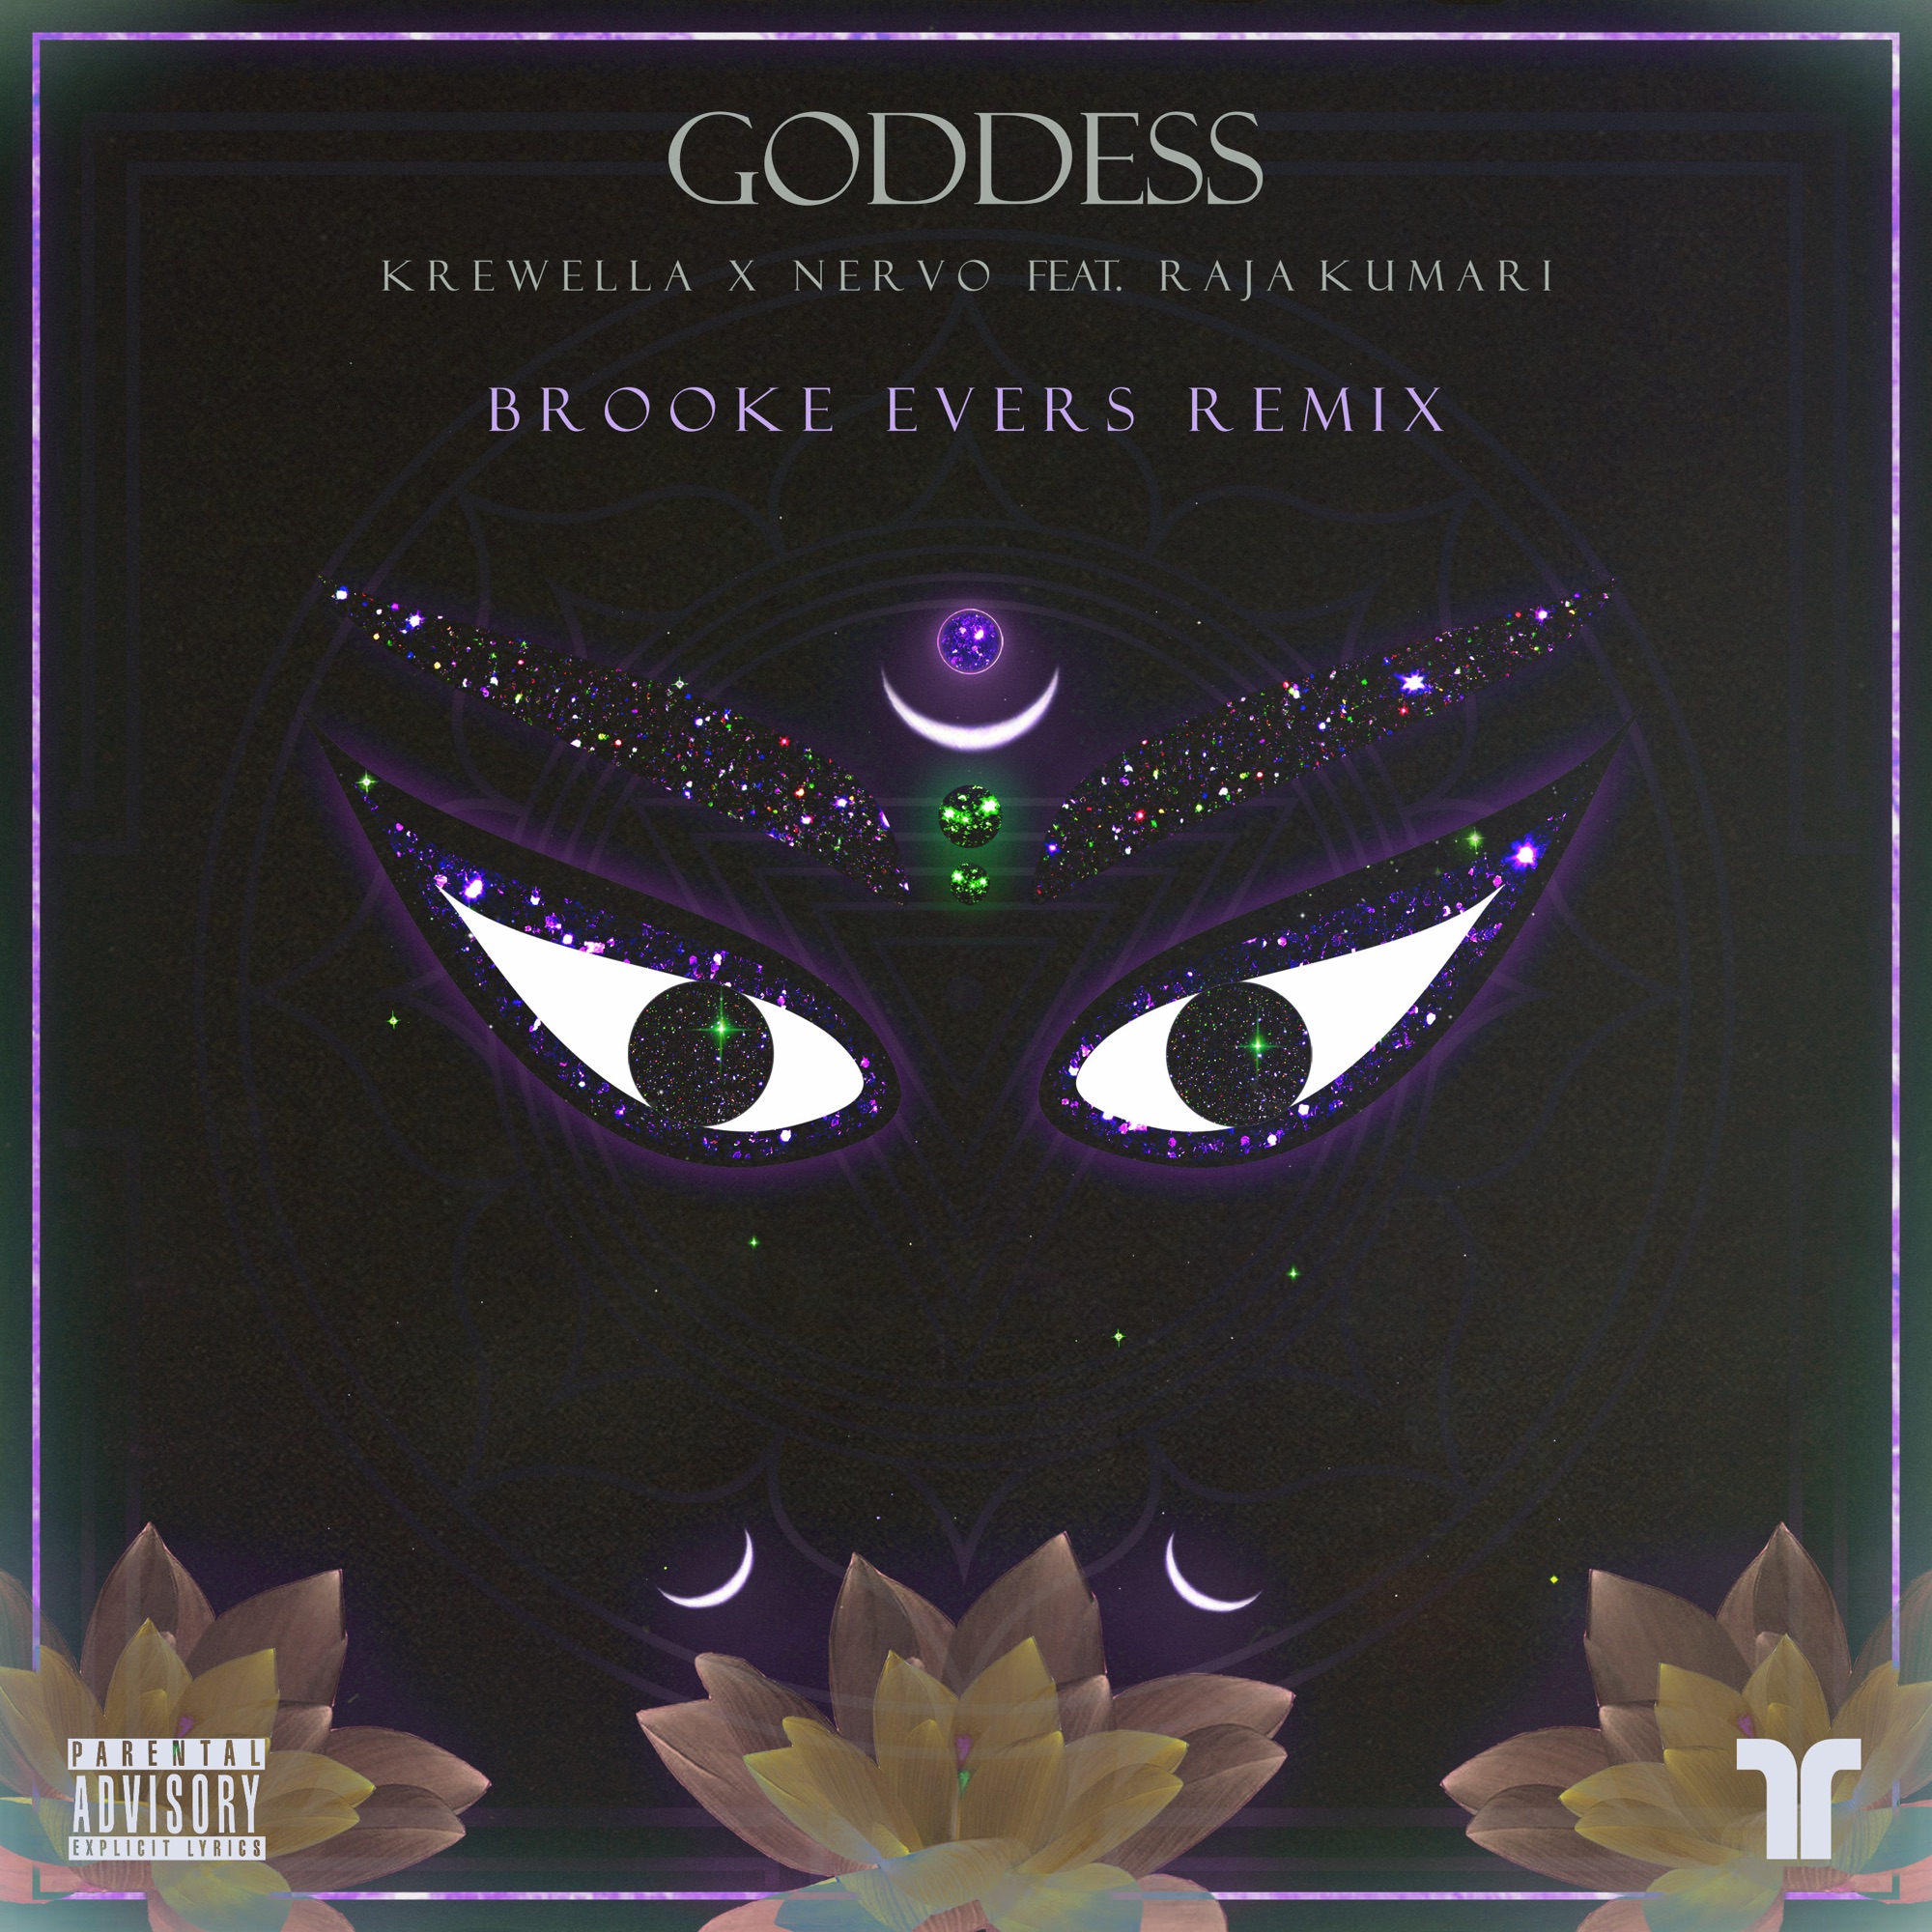 Krewella & NERVO - Goddess (Brooke Evers Remix) [feat. Raja Kumari] - Single